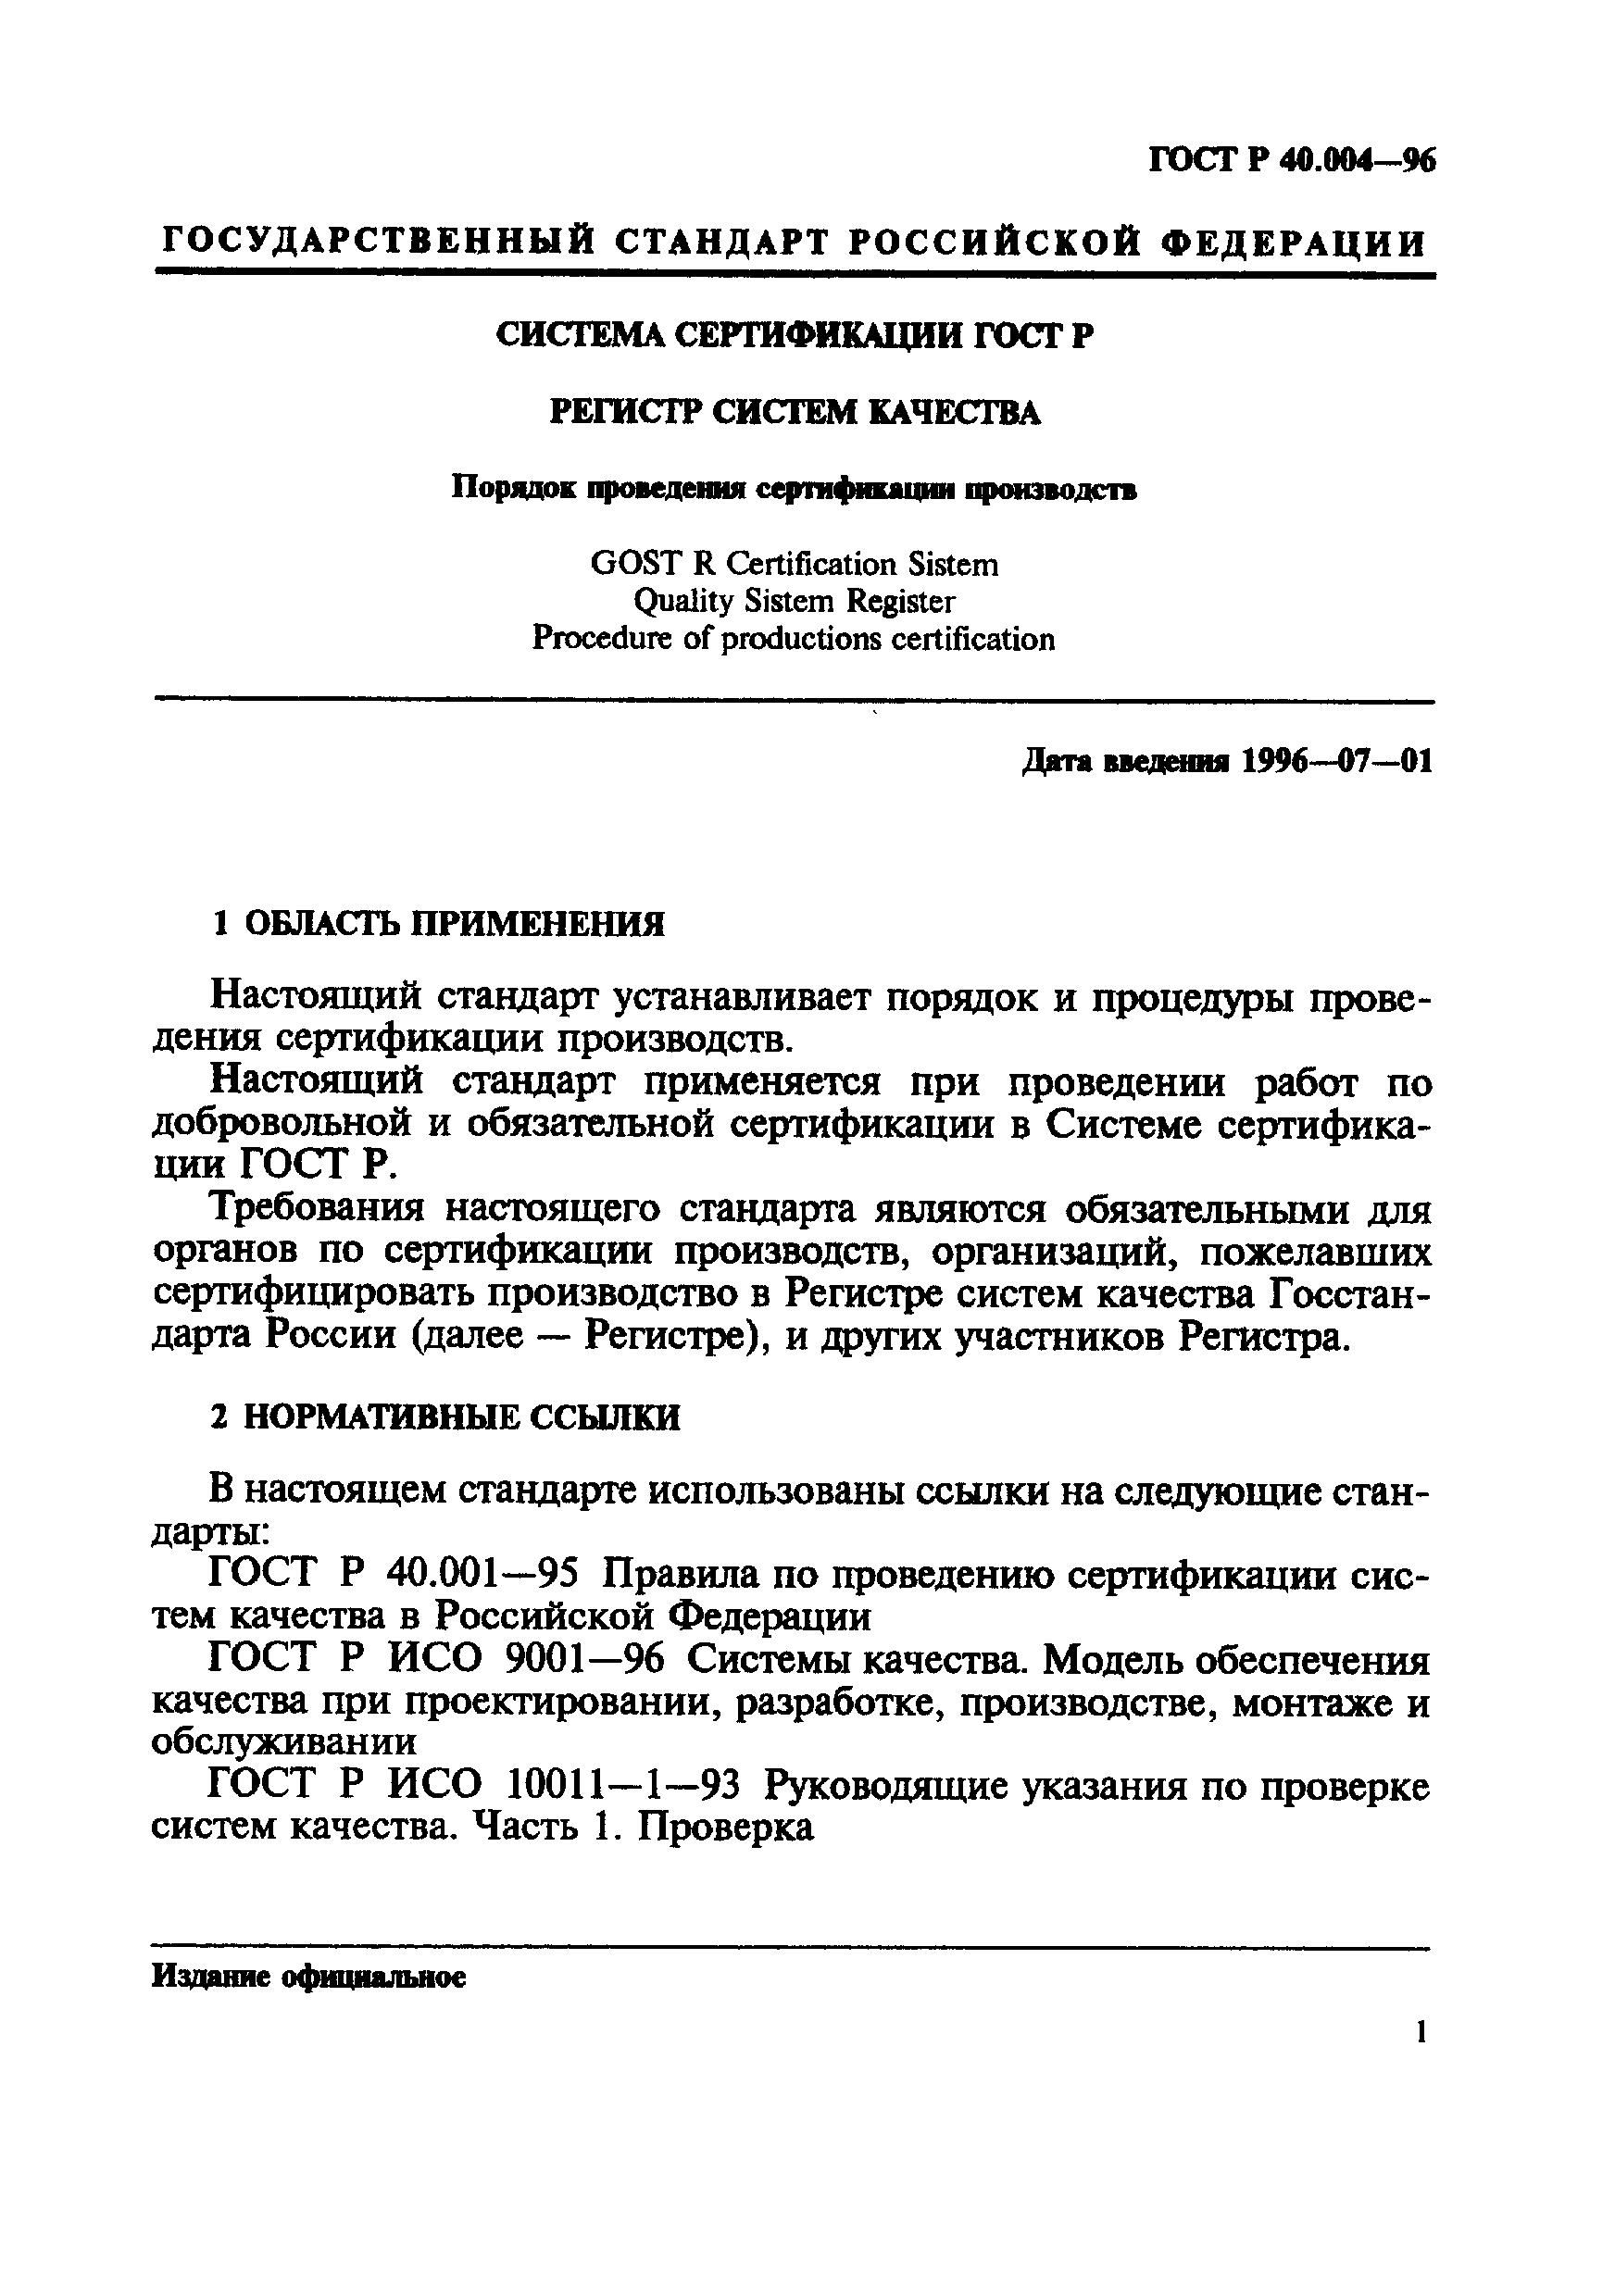 ГОСТ Р 40.004-96